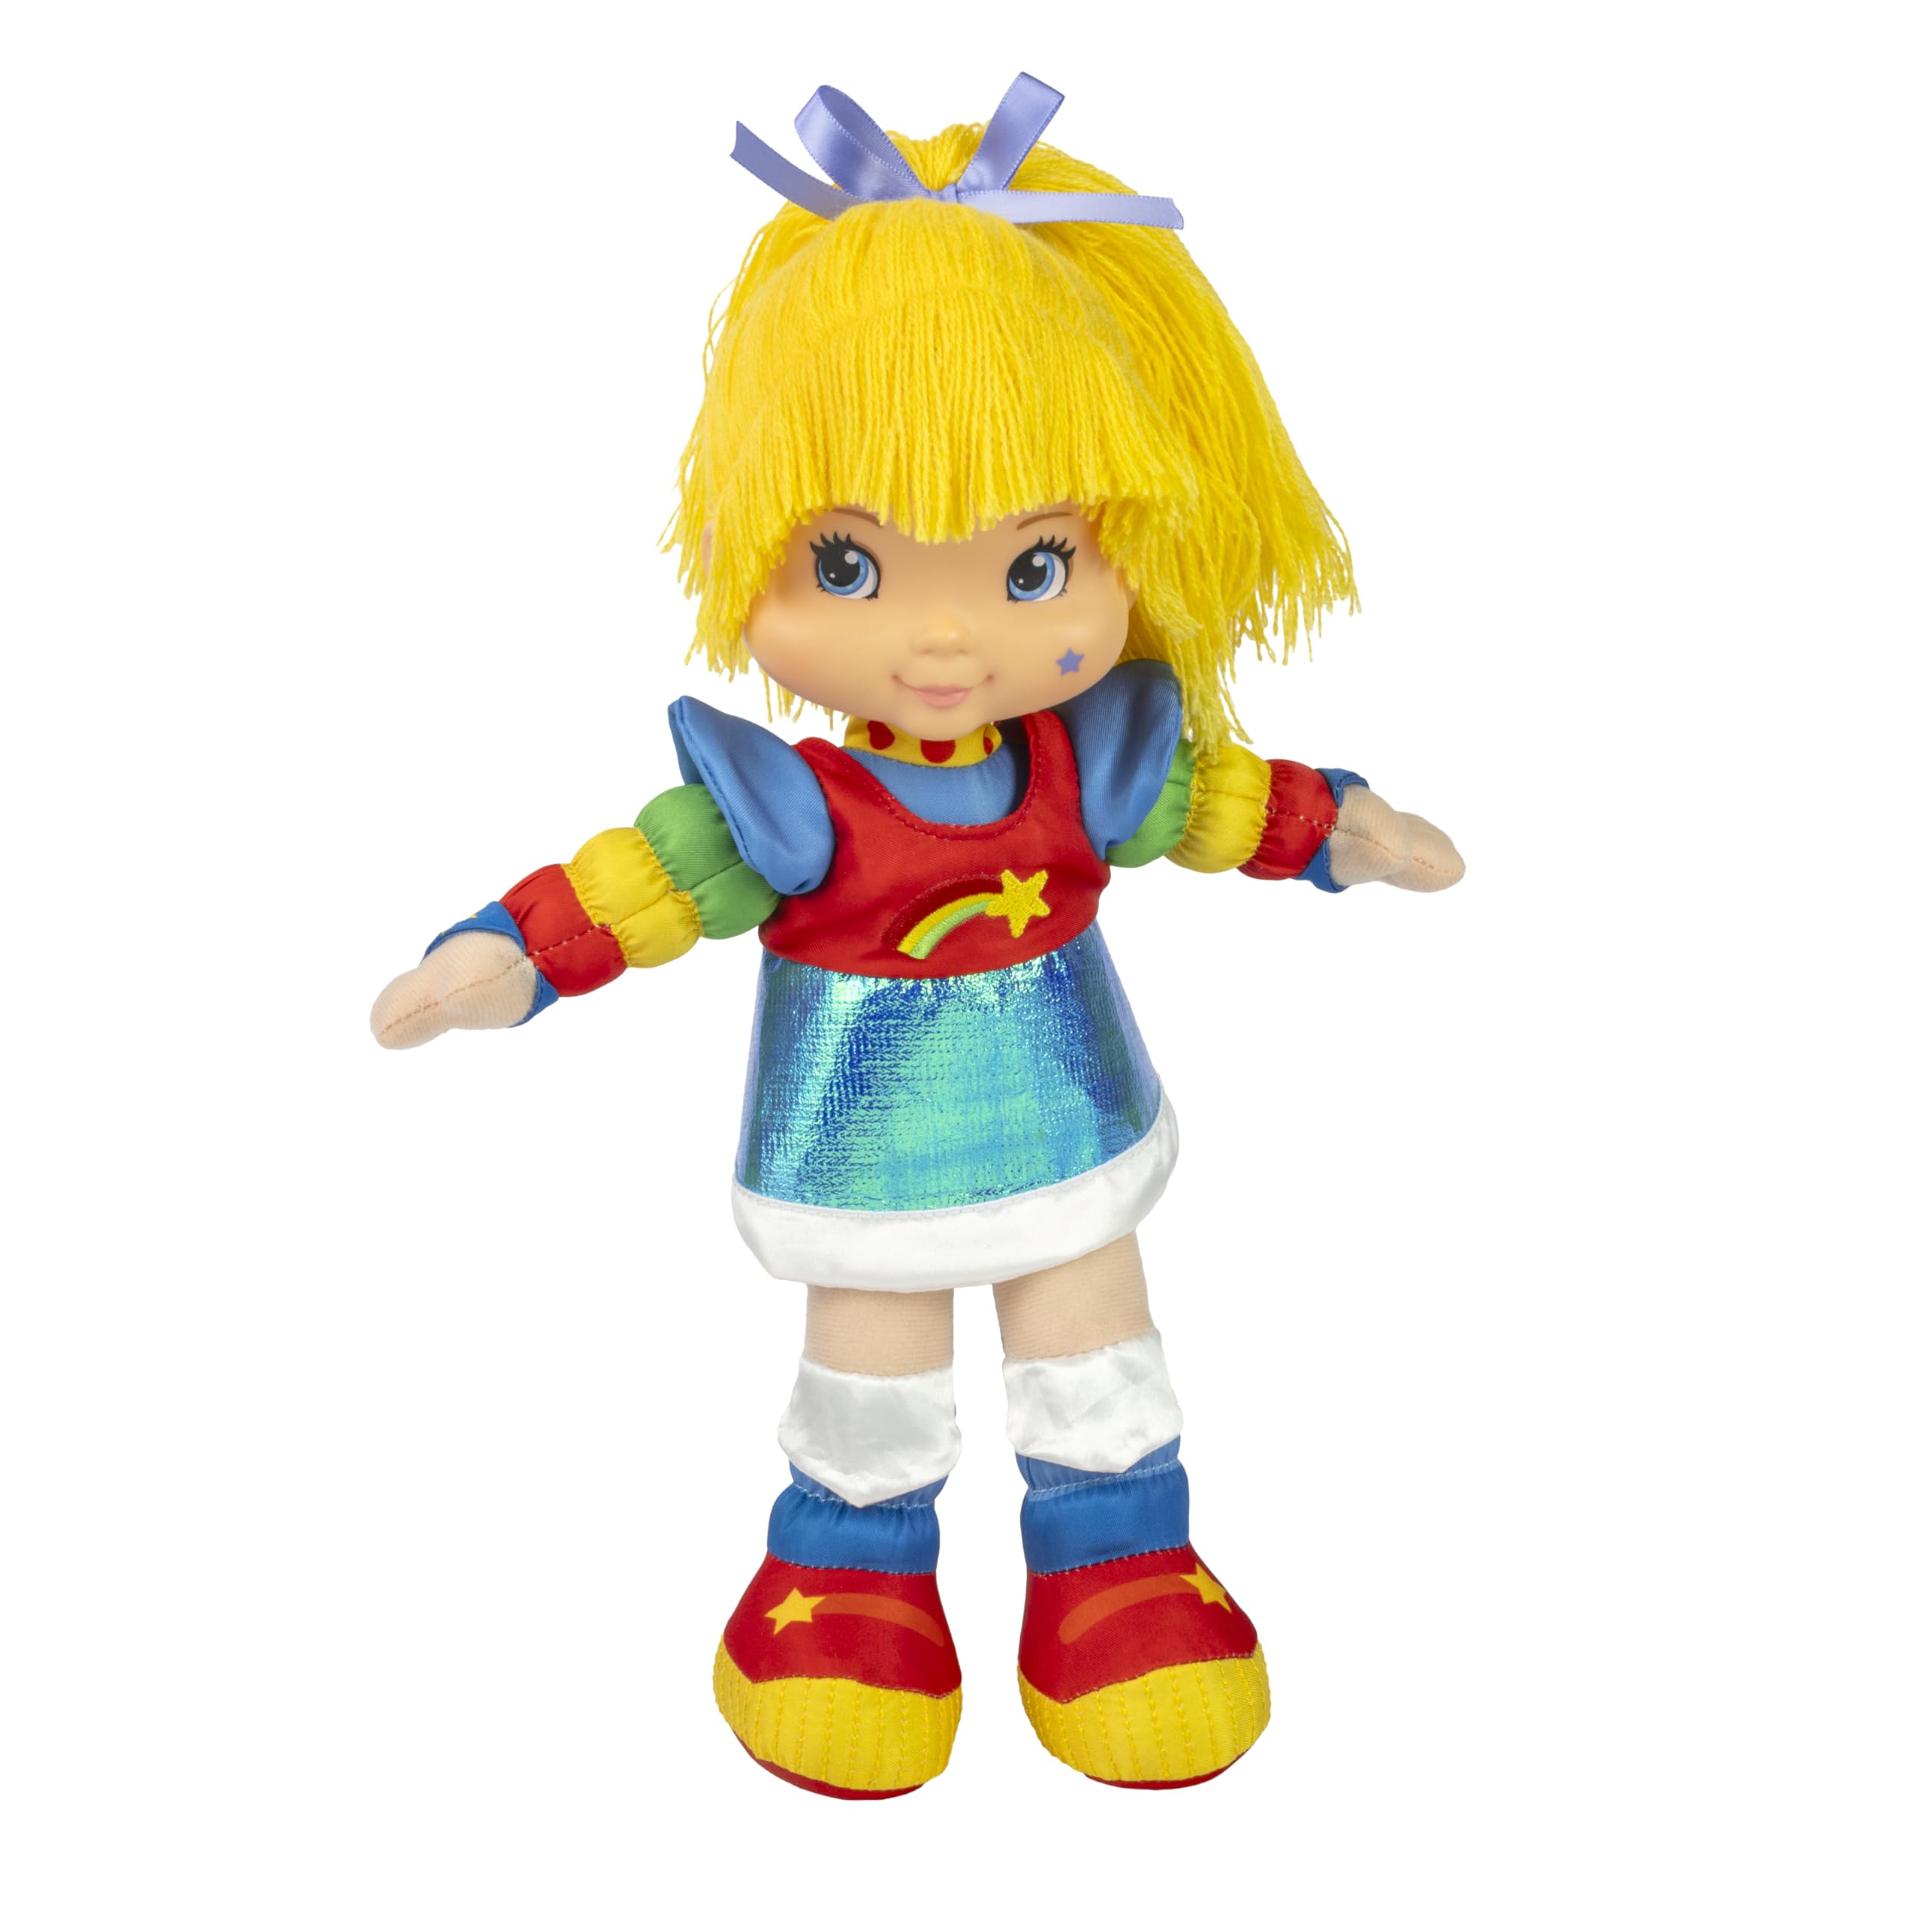 The Loyal Subjects Rainbow Brite 12-inch Plush Doll